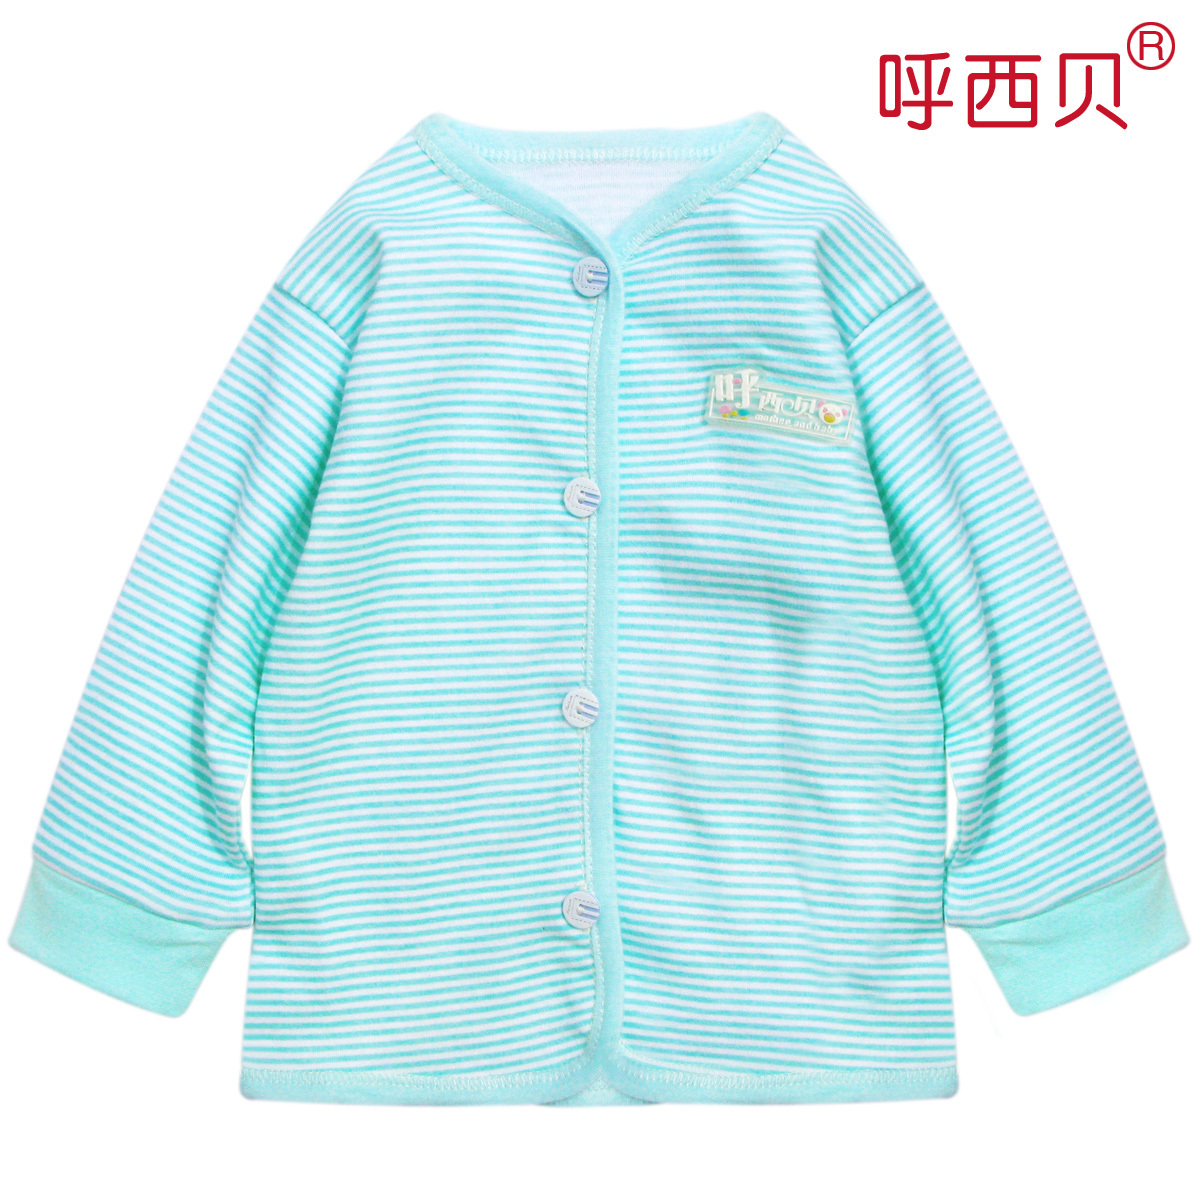 Child underwear lounge top 100% cotton baby sleepwear stripe long johns 005